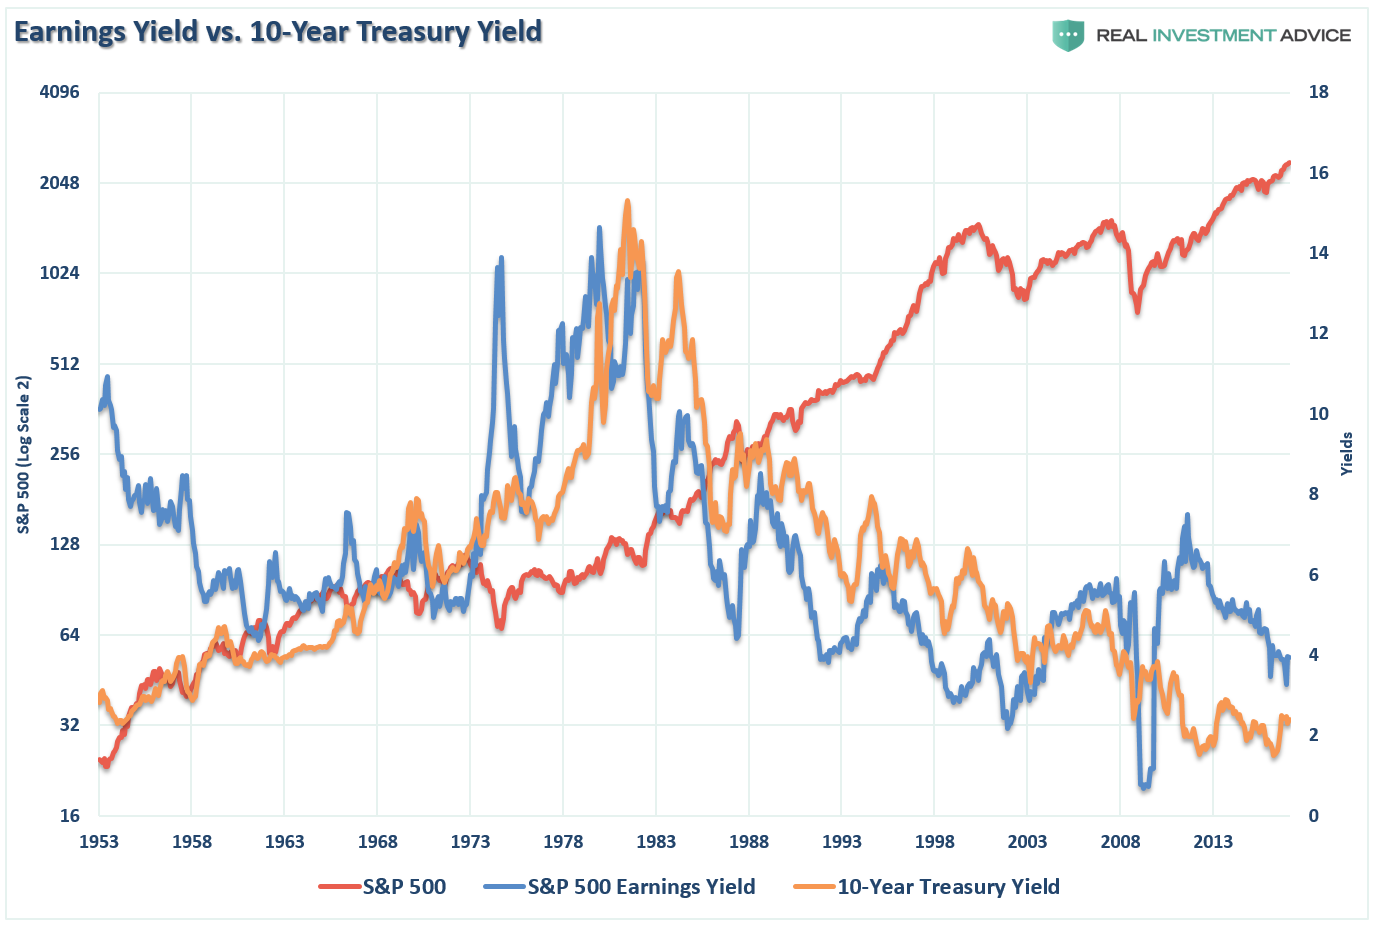 Earning Yield Vs 10-Year Treasury Yield